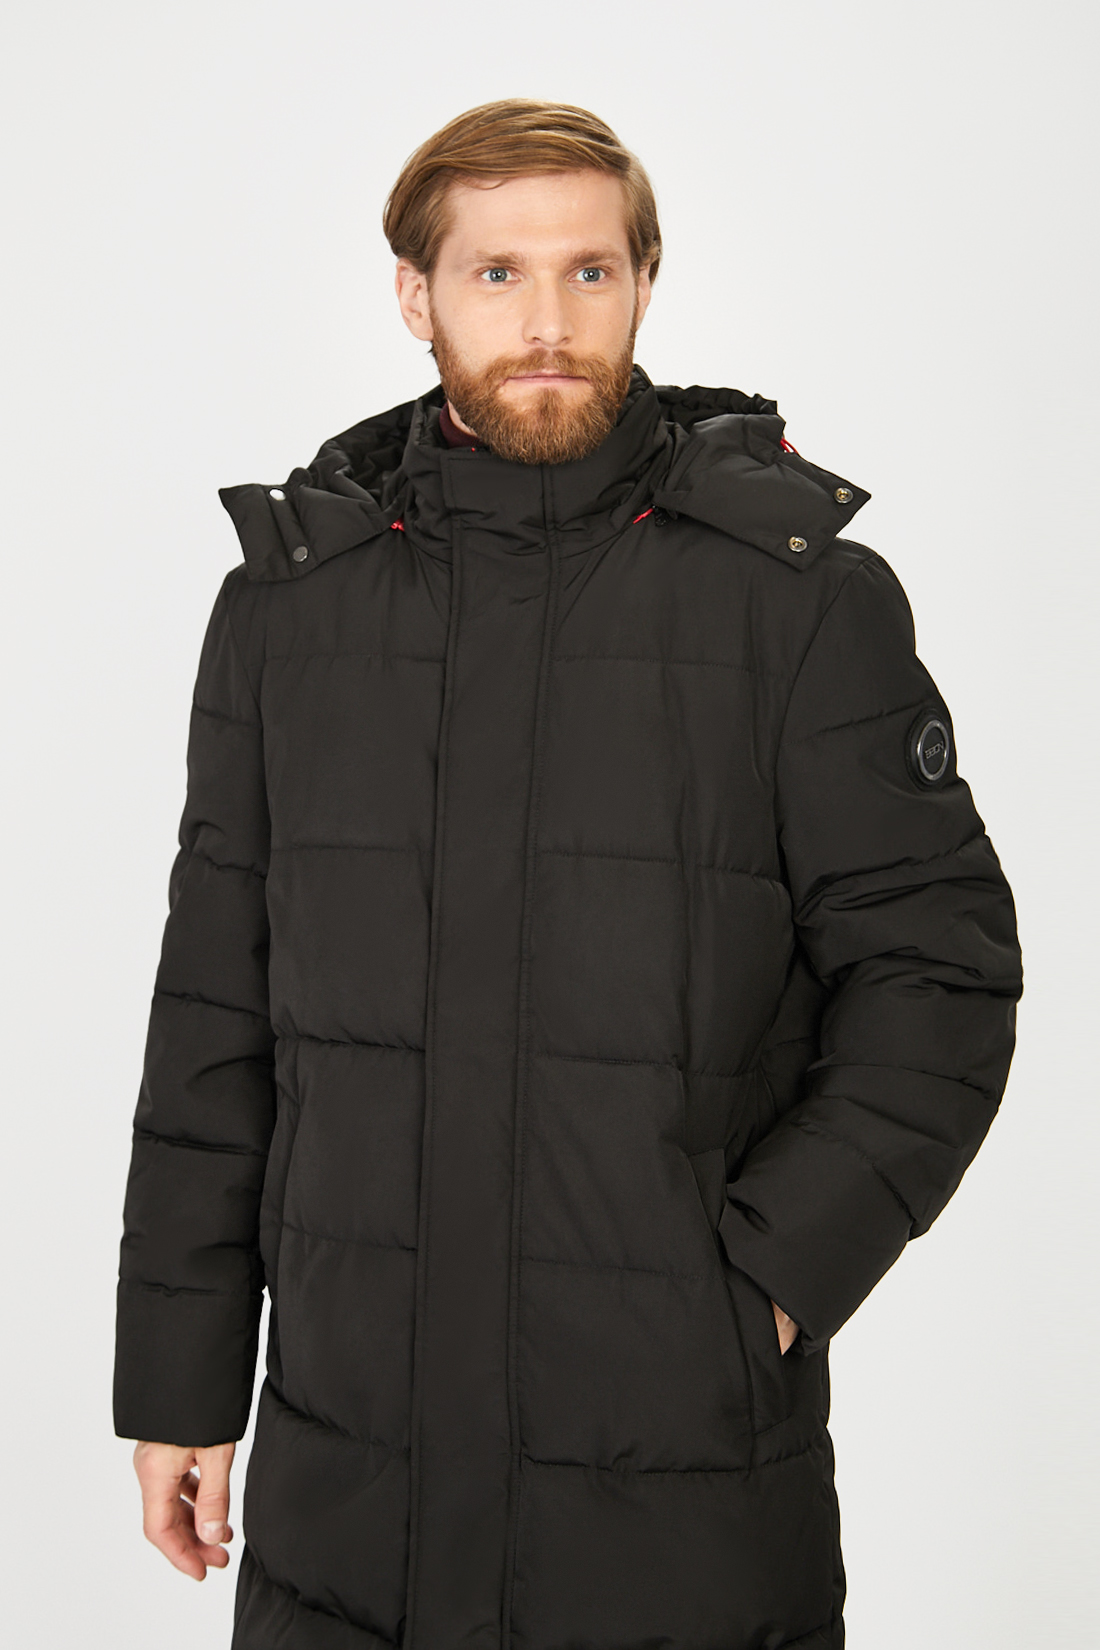 Куртка (Эко пух) (арт. baon B541506), размер M, цвет черный Куртка (Эко пух) (арт. baon B541506) - фото 6